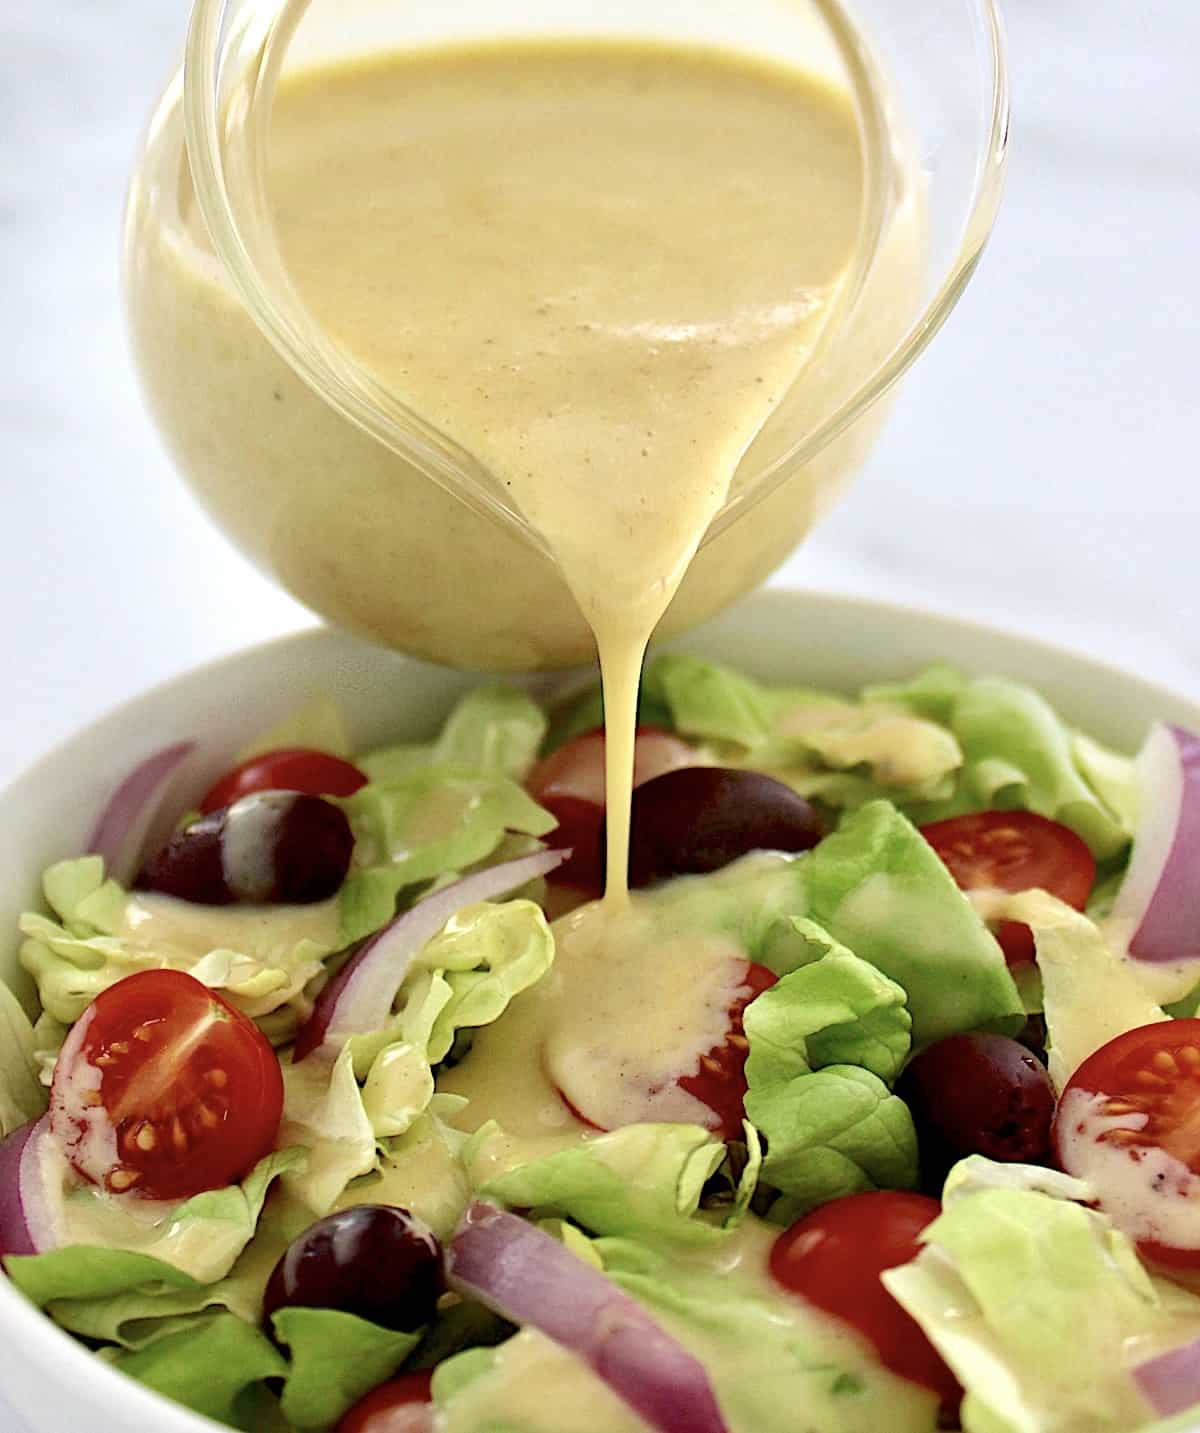 Honey Mustard Dressing being poured over salad